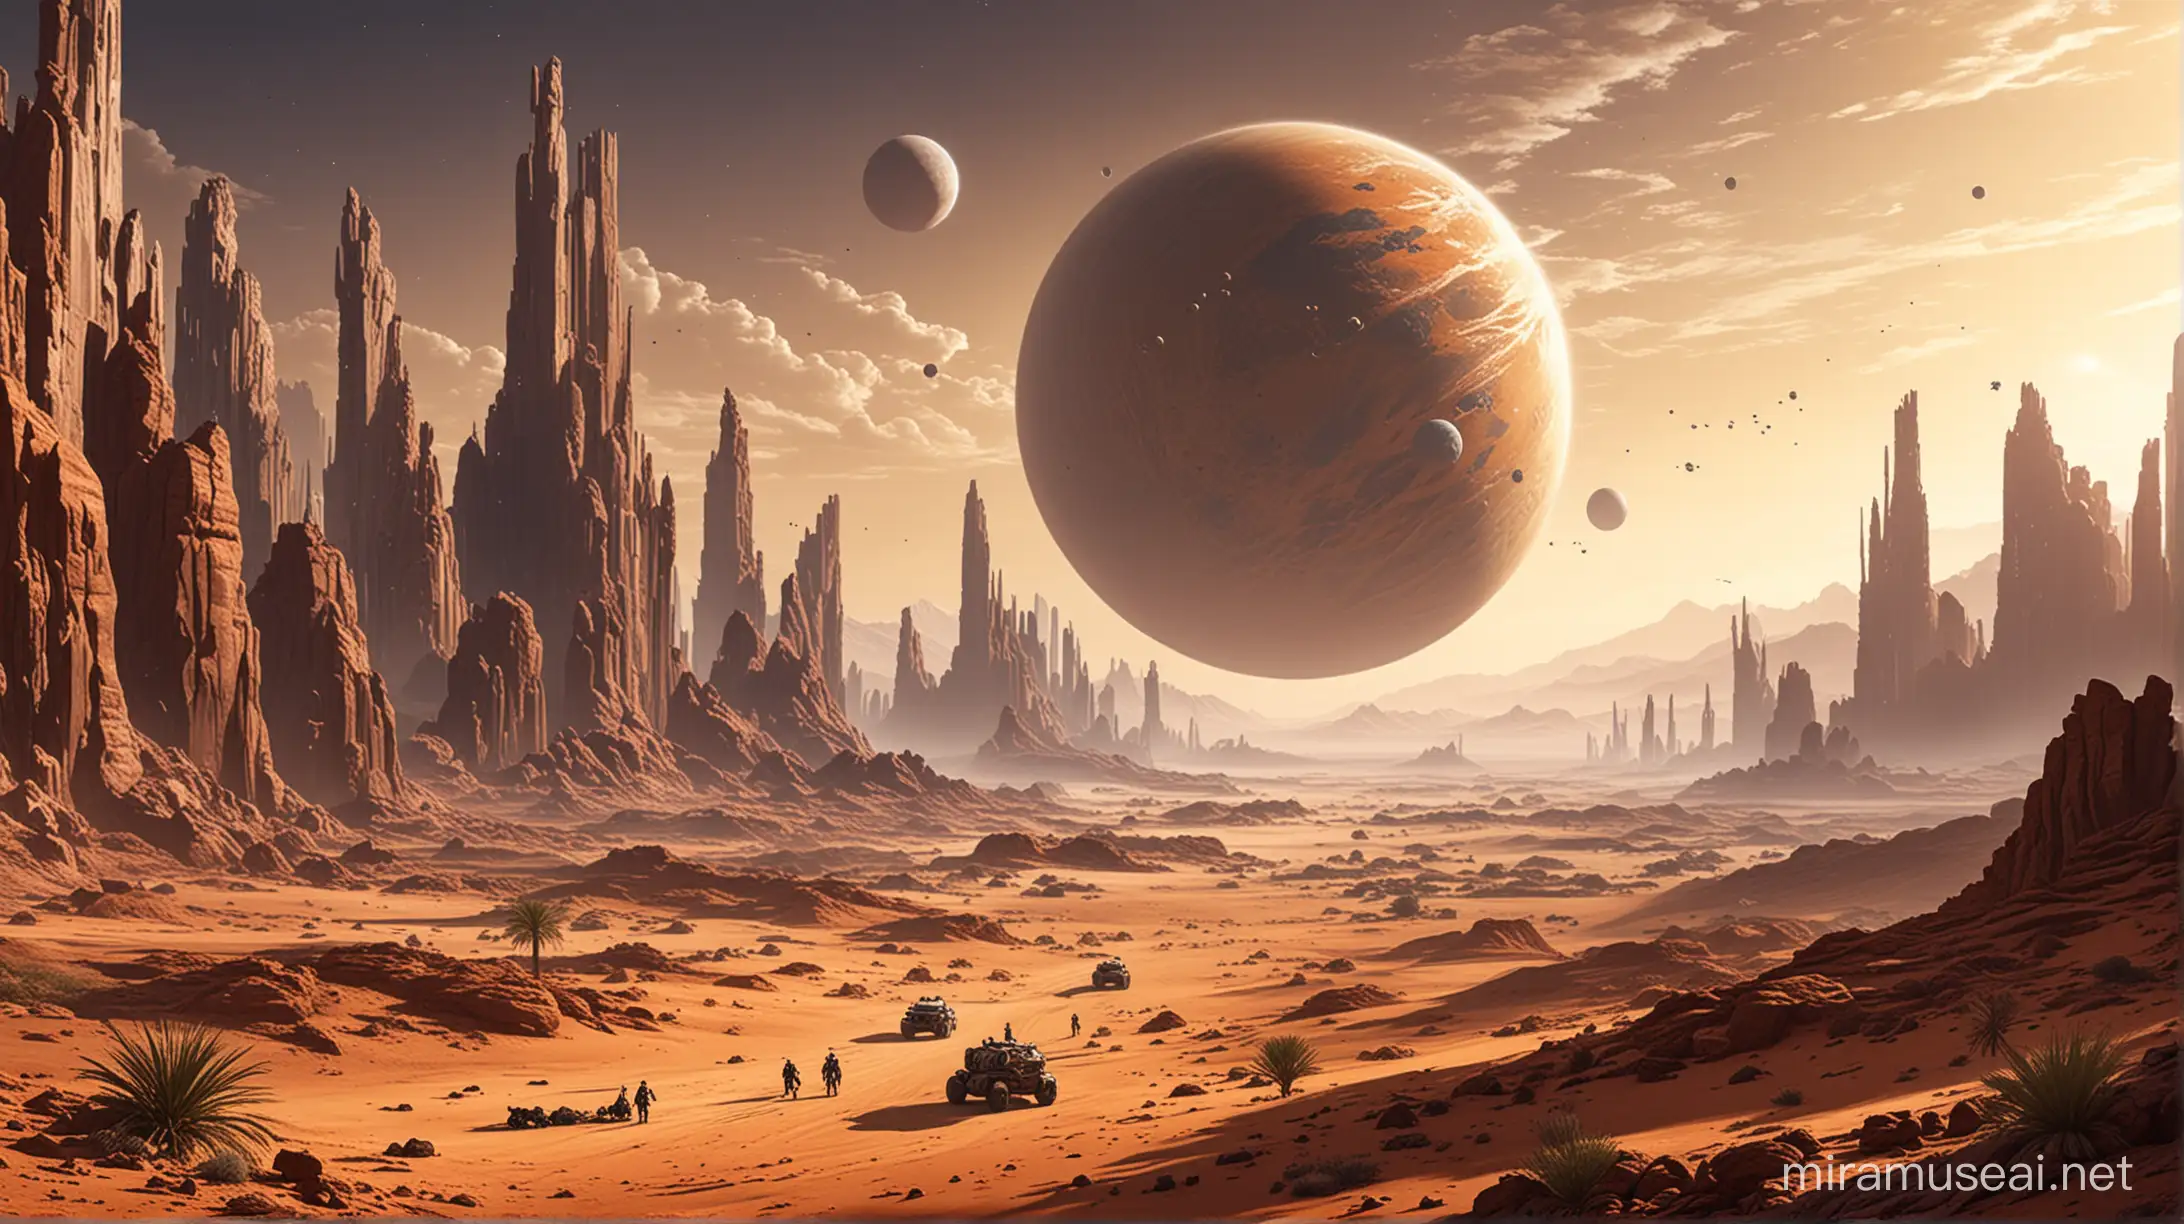 
colonization of a desert planet